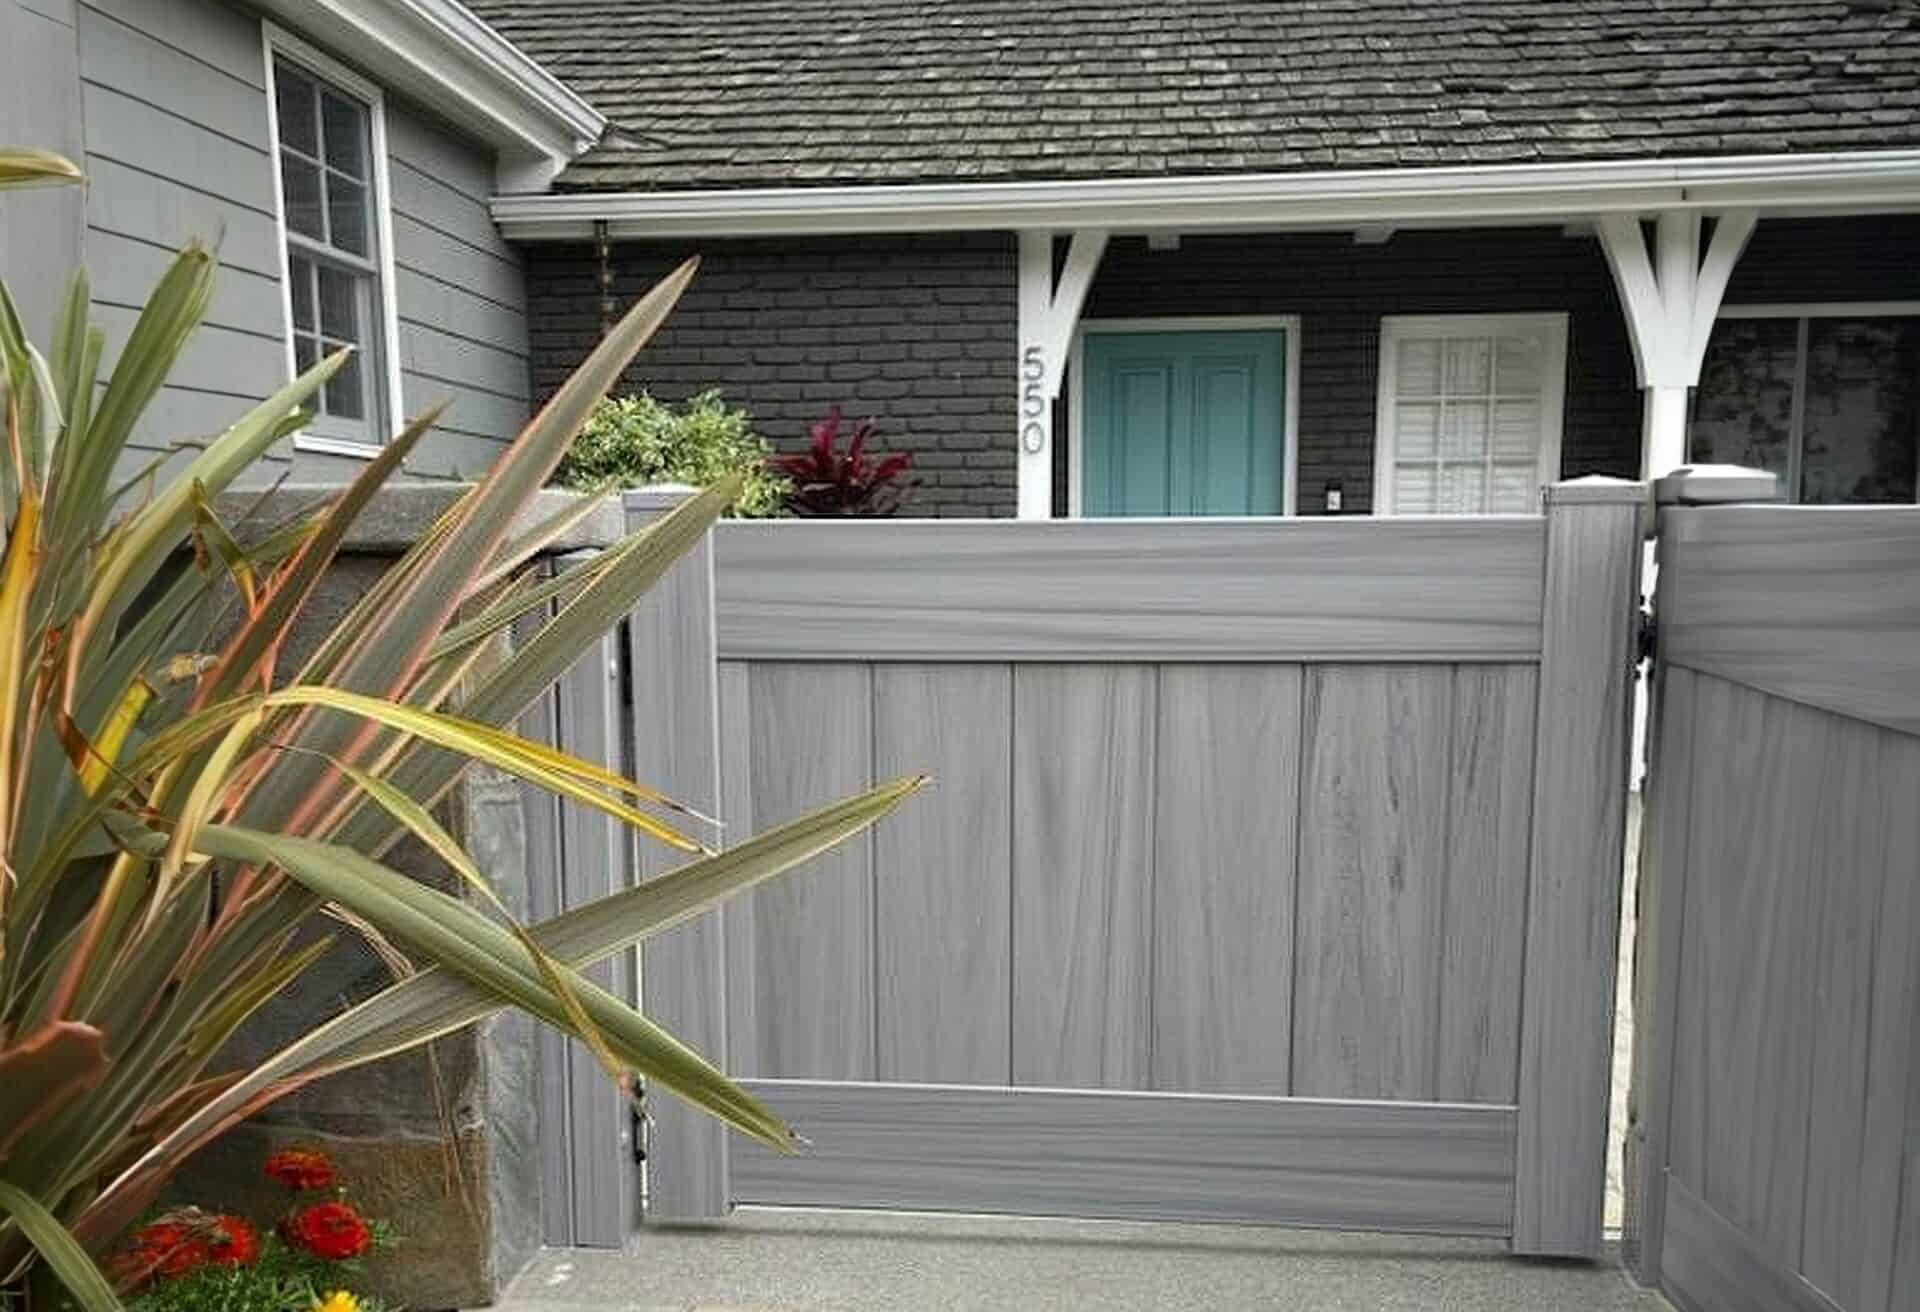 Vinyl coastal cedar colored fence with small gate leading into main entrance of modern suburban home